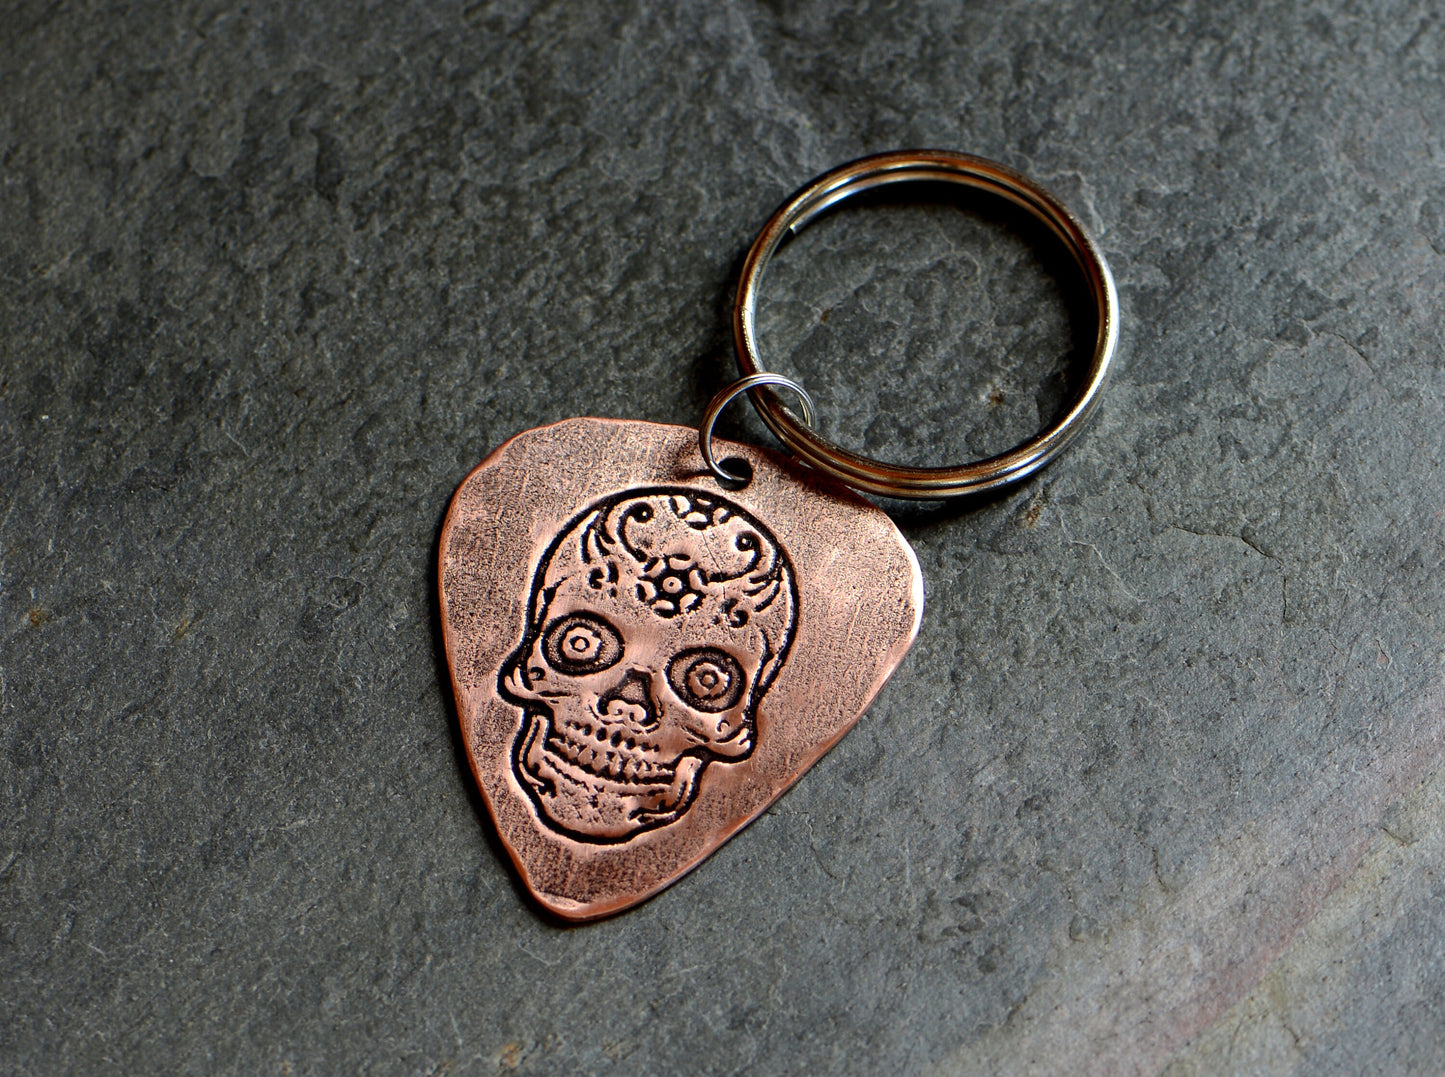 Copper guitar pick key chain with sugar skull